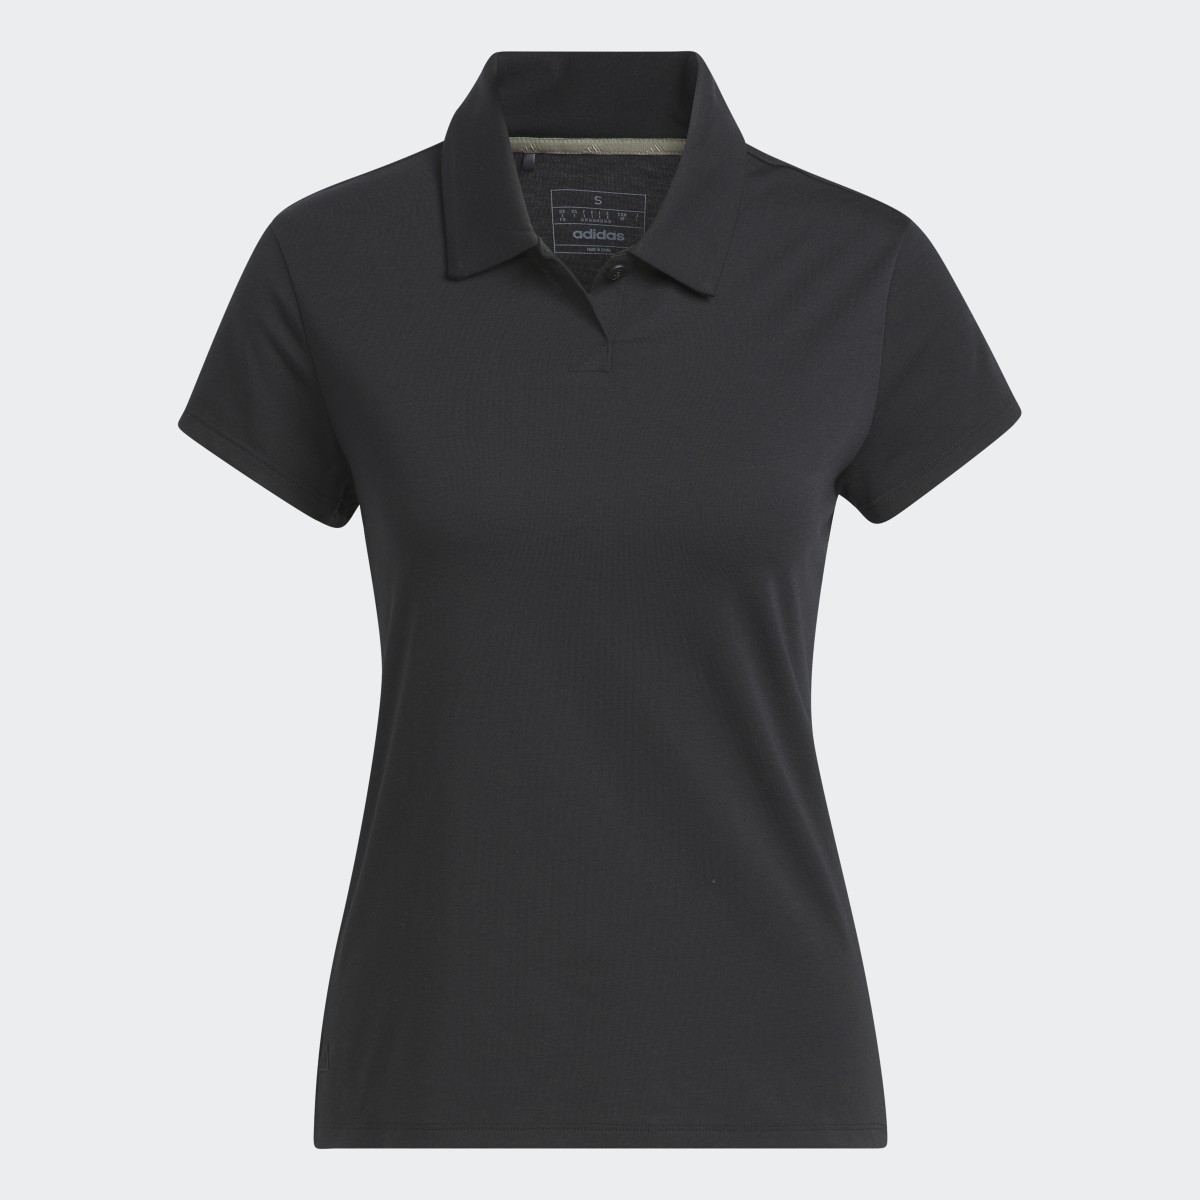 Adidas Go-To Heathered Golf Polo Shirt. 5